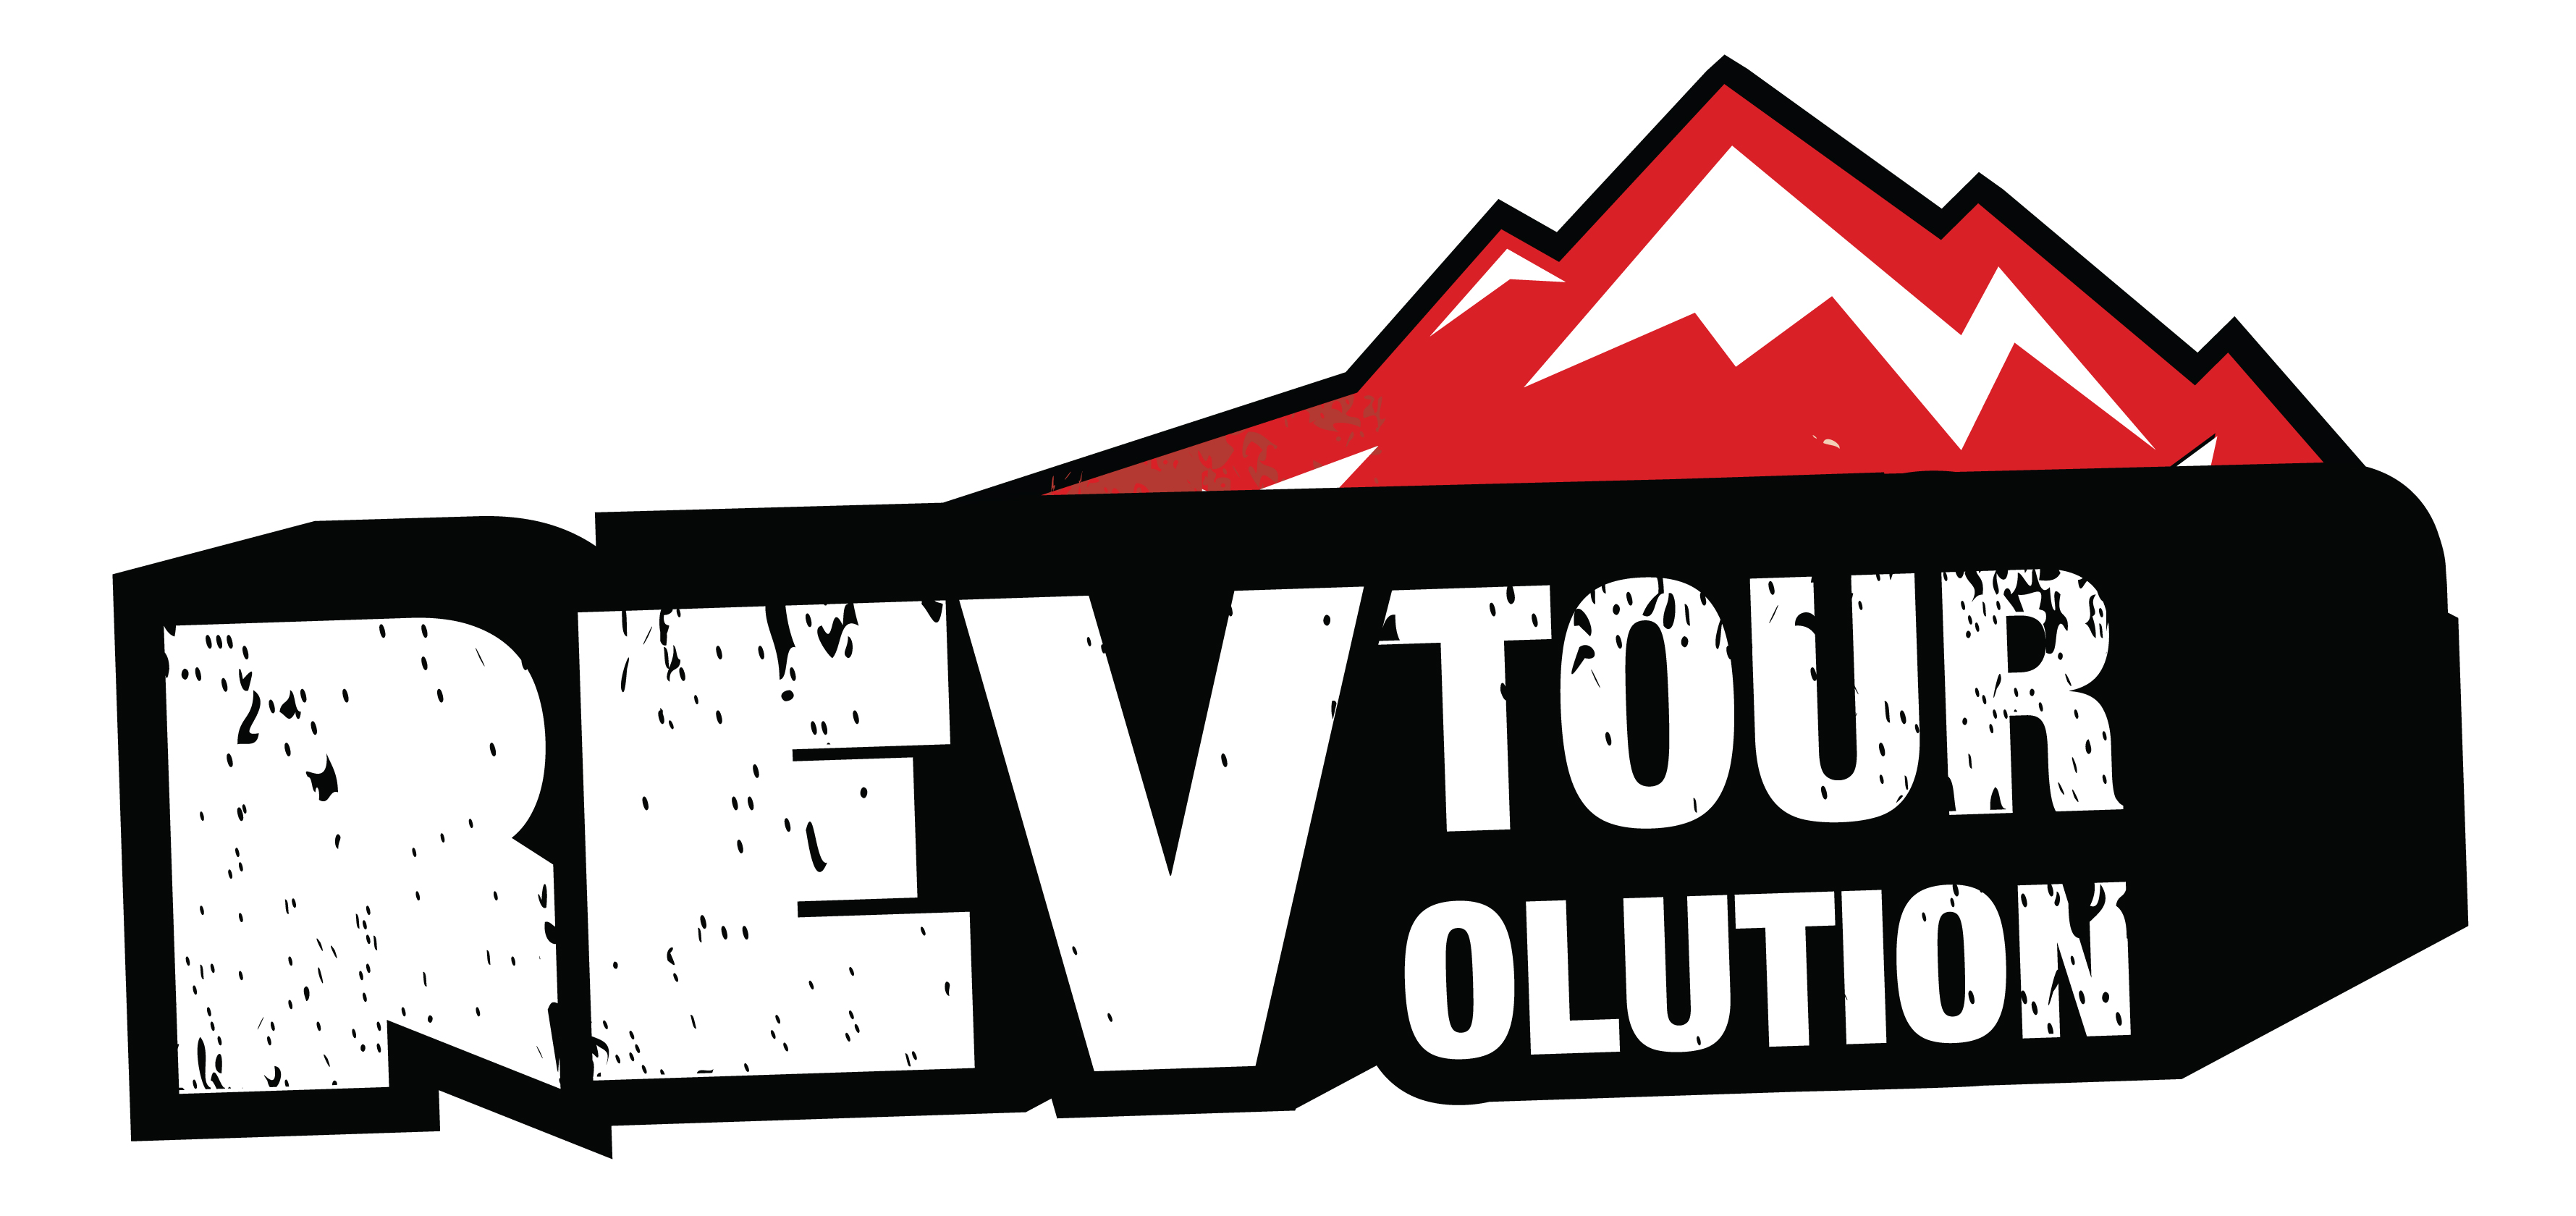 US Revolution Tour Registration Information